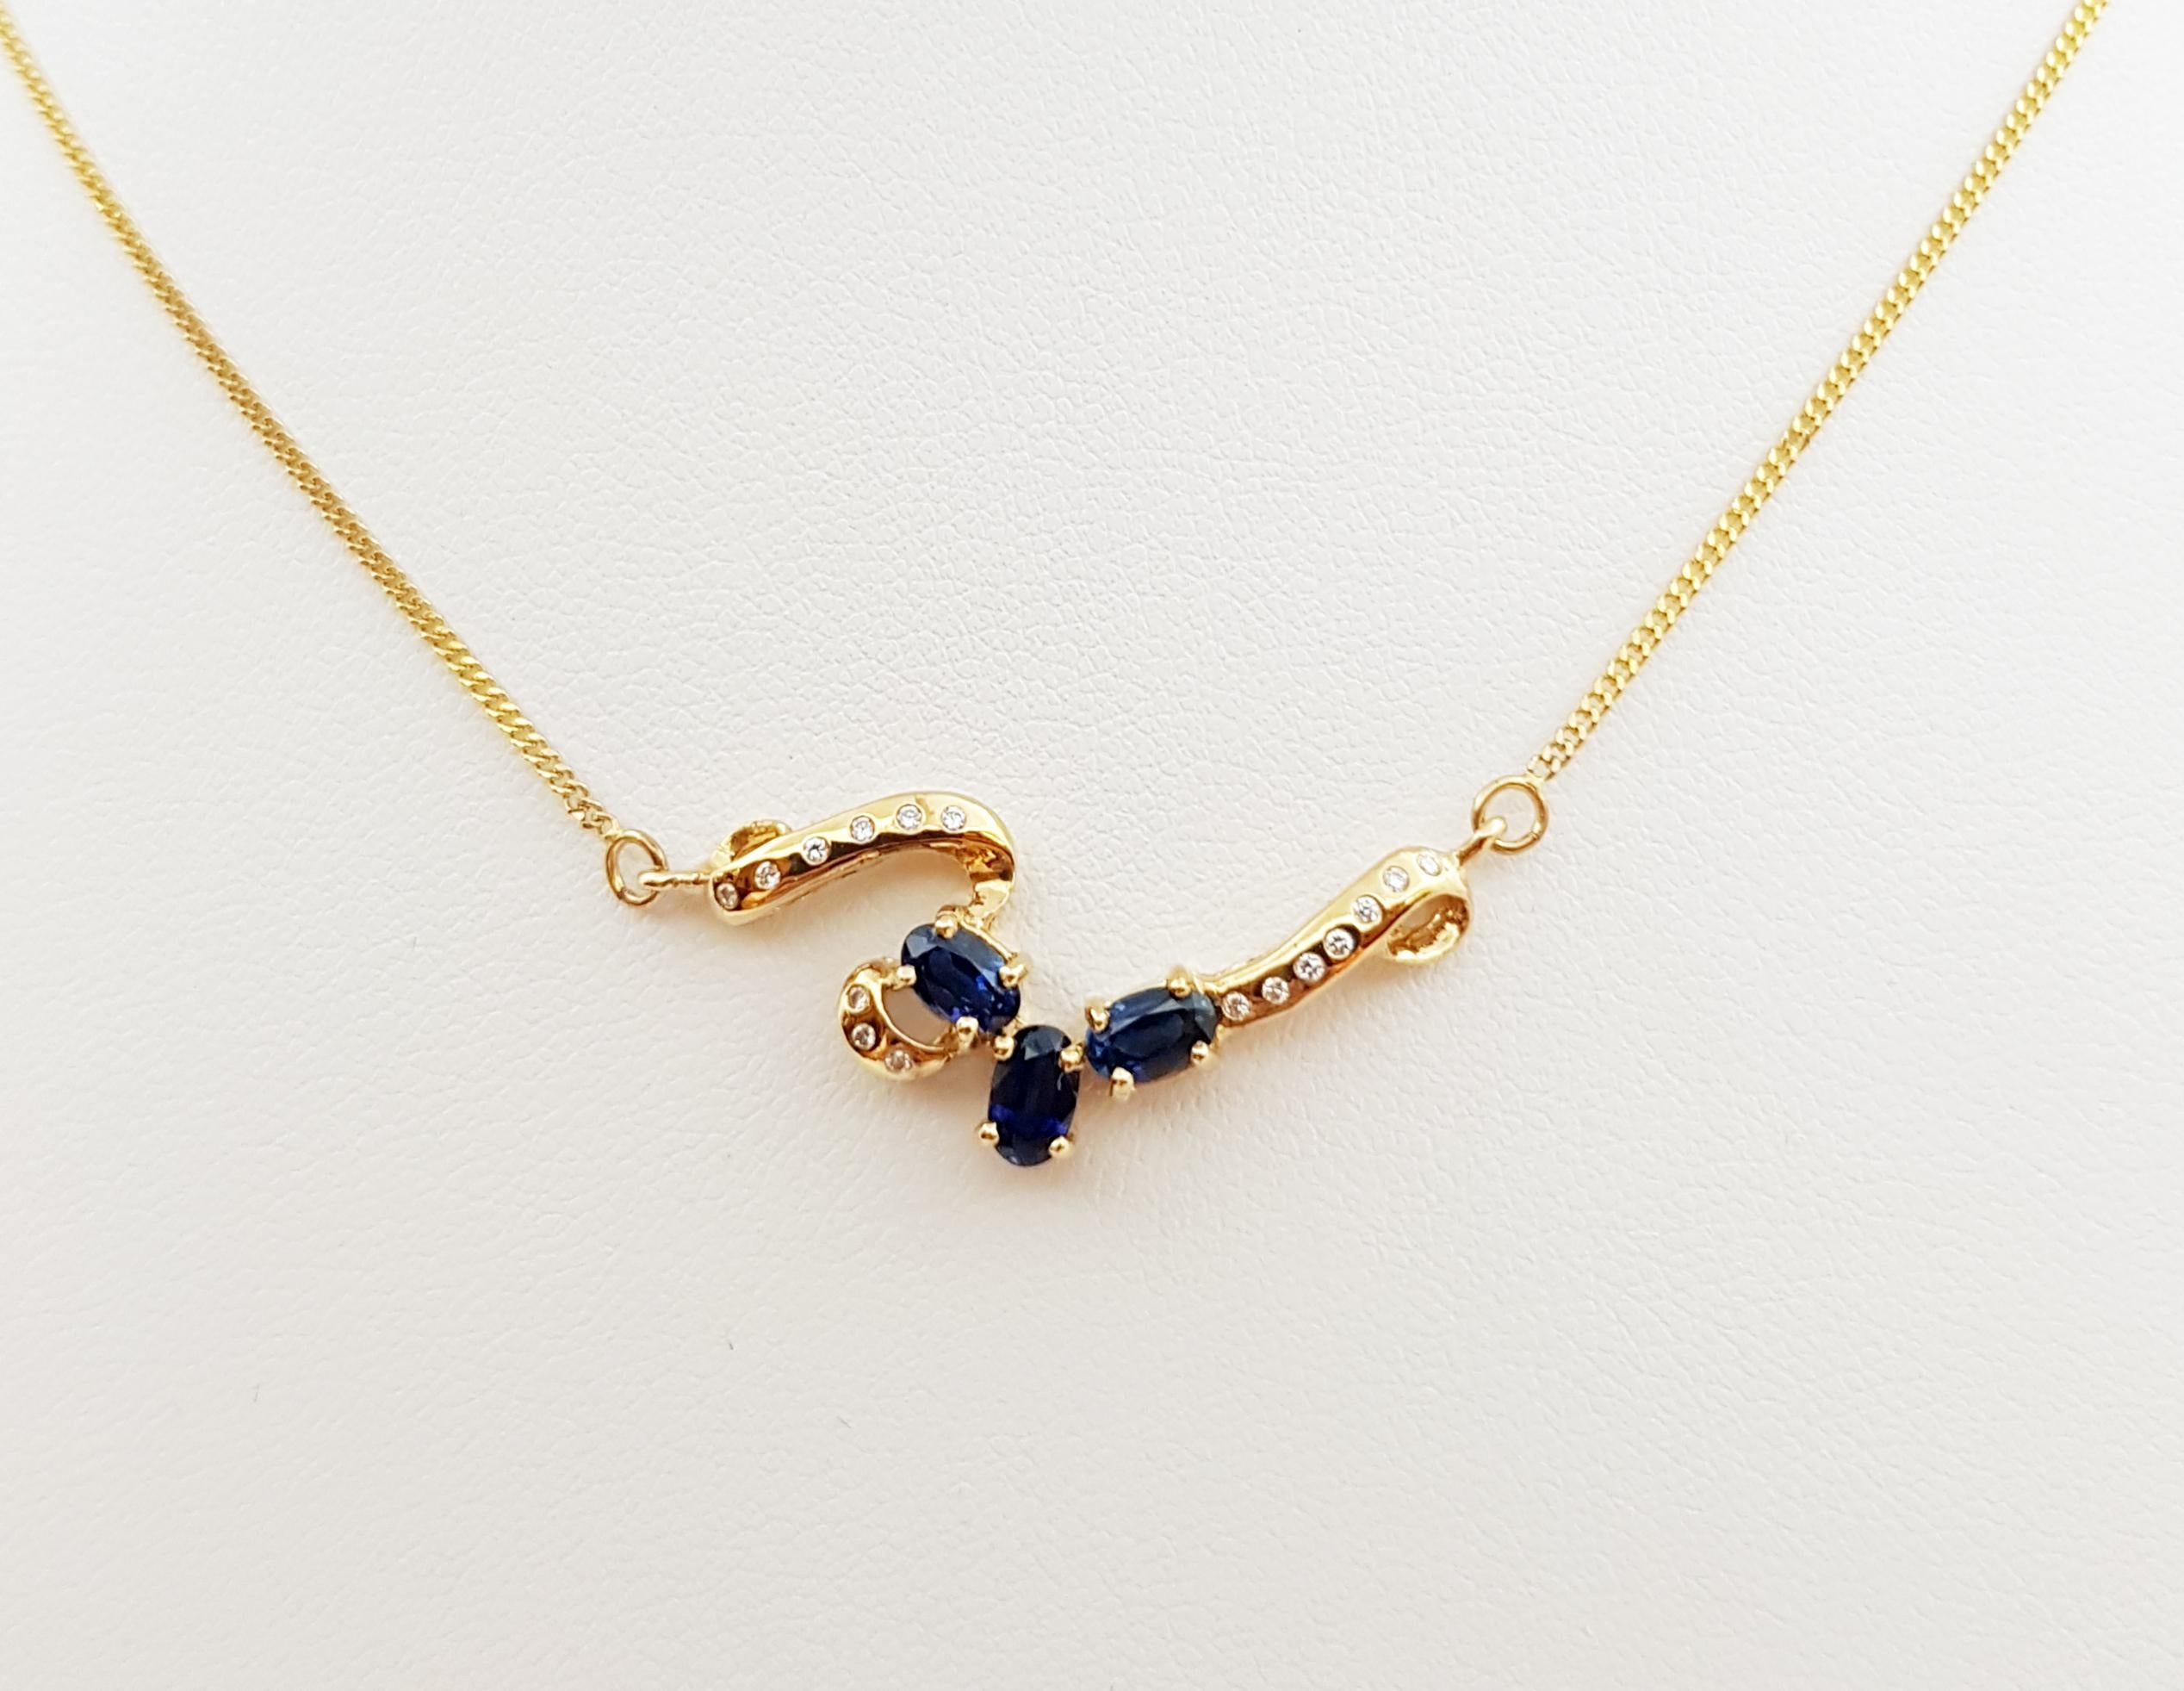 Blue Sapphire 0.97 carat with Diamond 0.07 carat Necklace set in 18 Karat Gold Settings

Width: 1.3 cm 
Length: 43.5 cm
Total Weight: 5.0 grams

